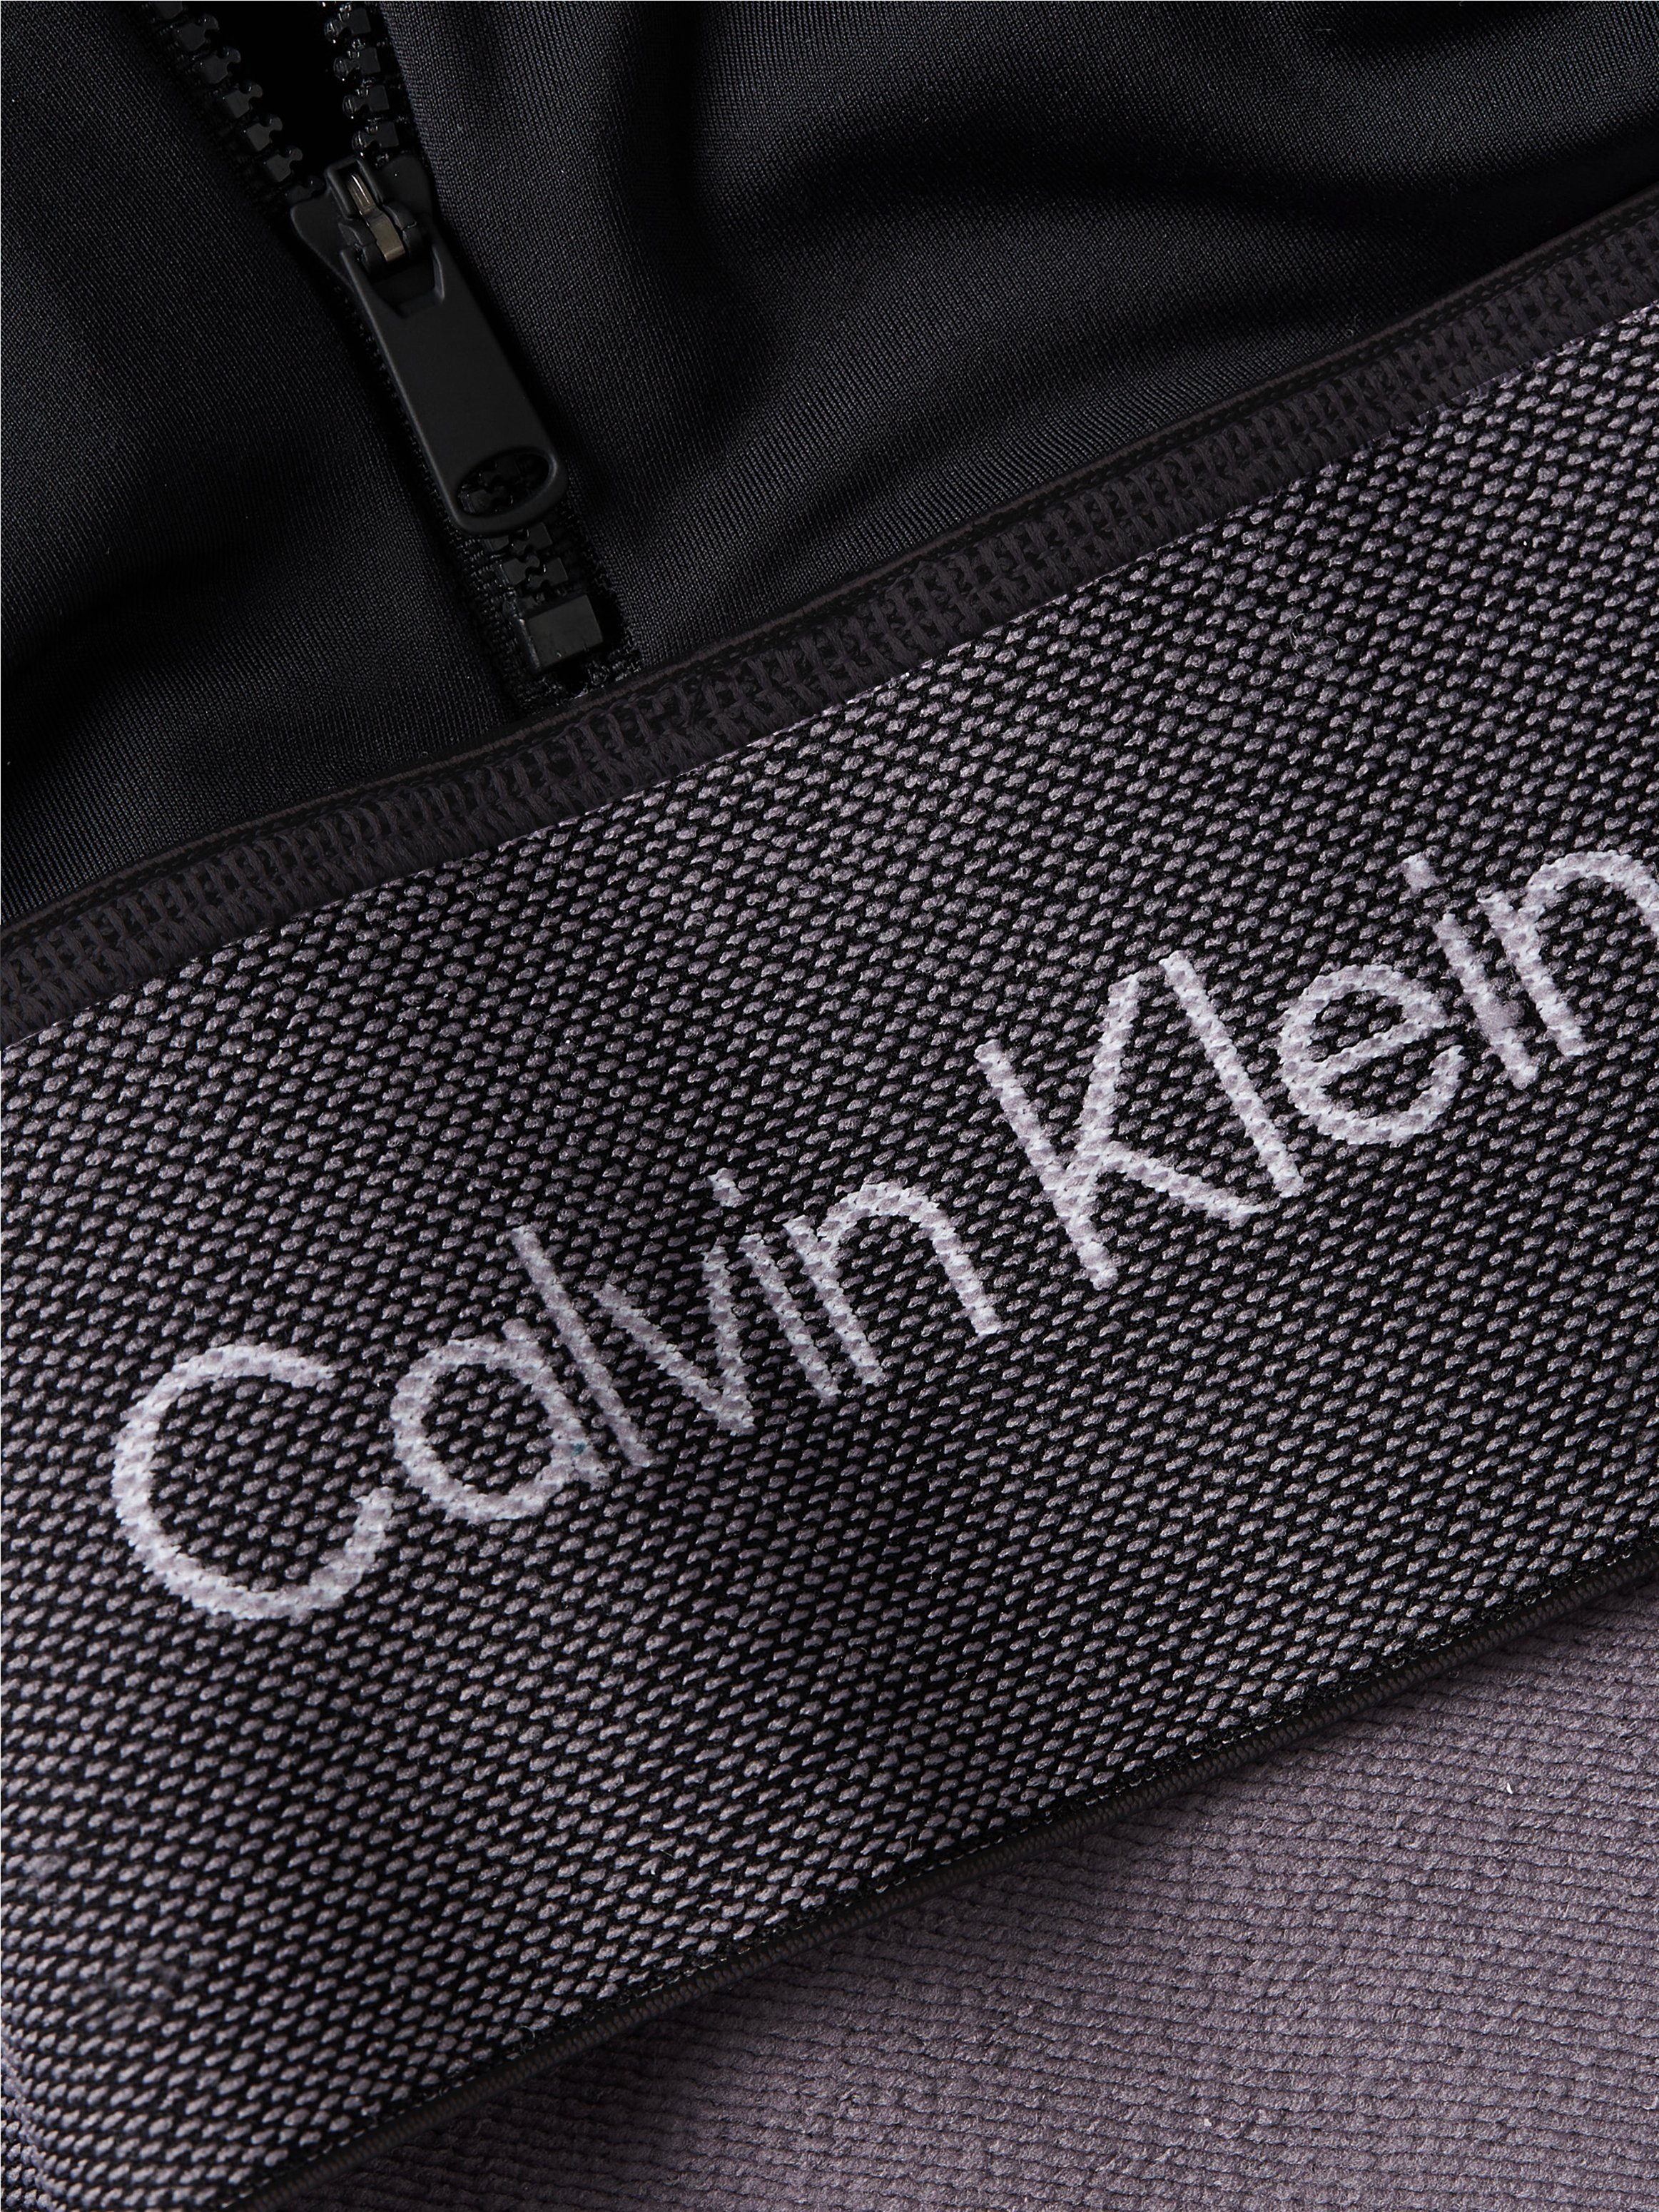 Calvin Klein Sport Medium WO Support Black Sport-Bustier - Bra Beauty Sports